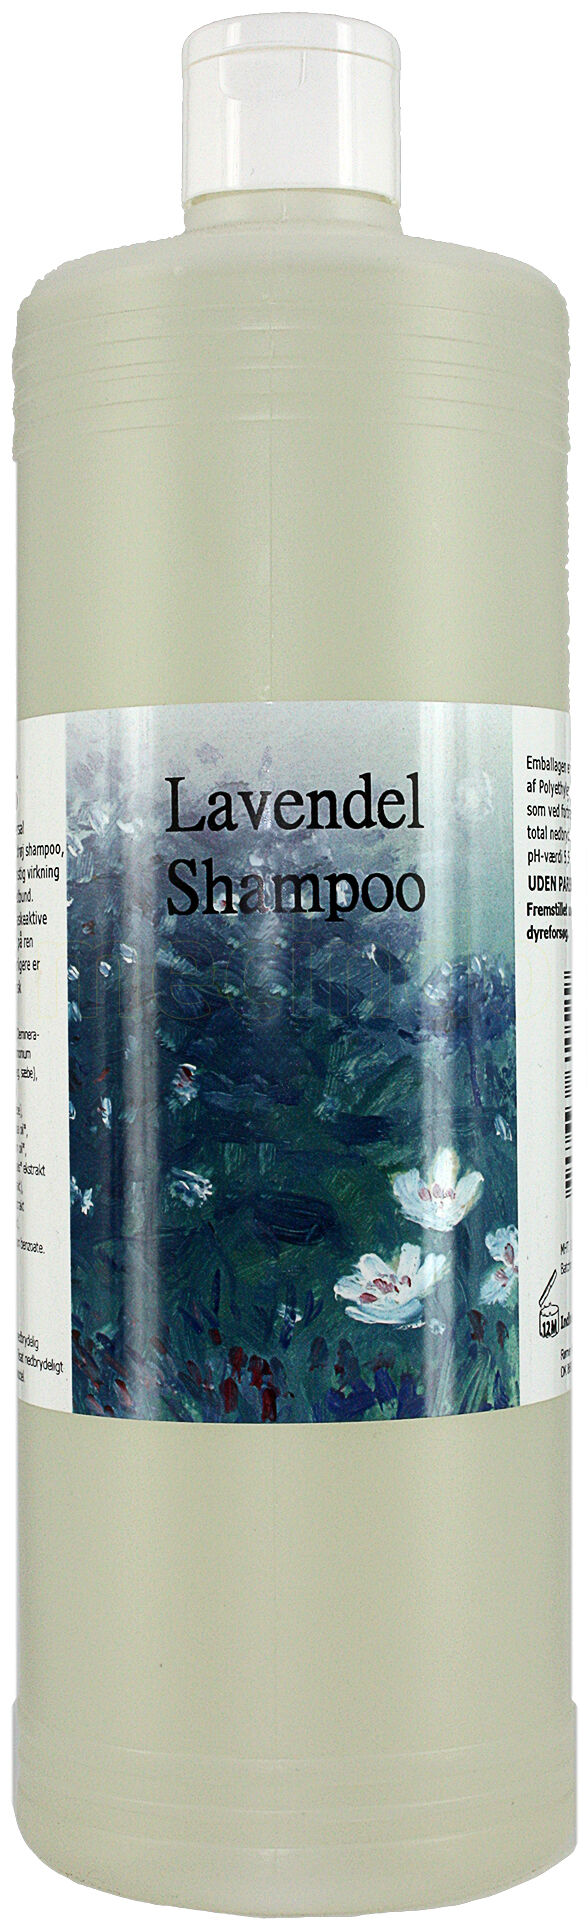 Rømer Lavendel Shampoo - 1 Liter